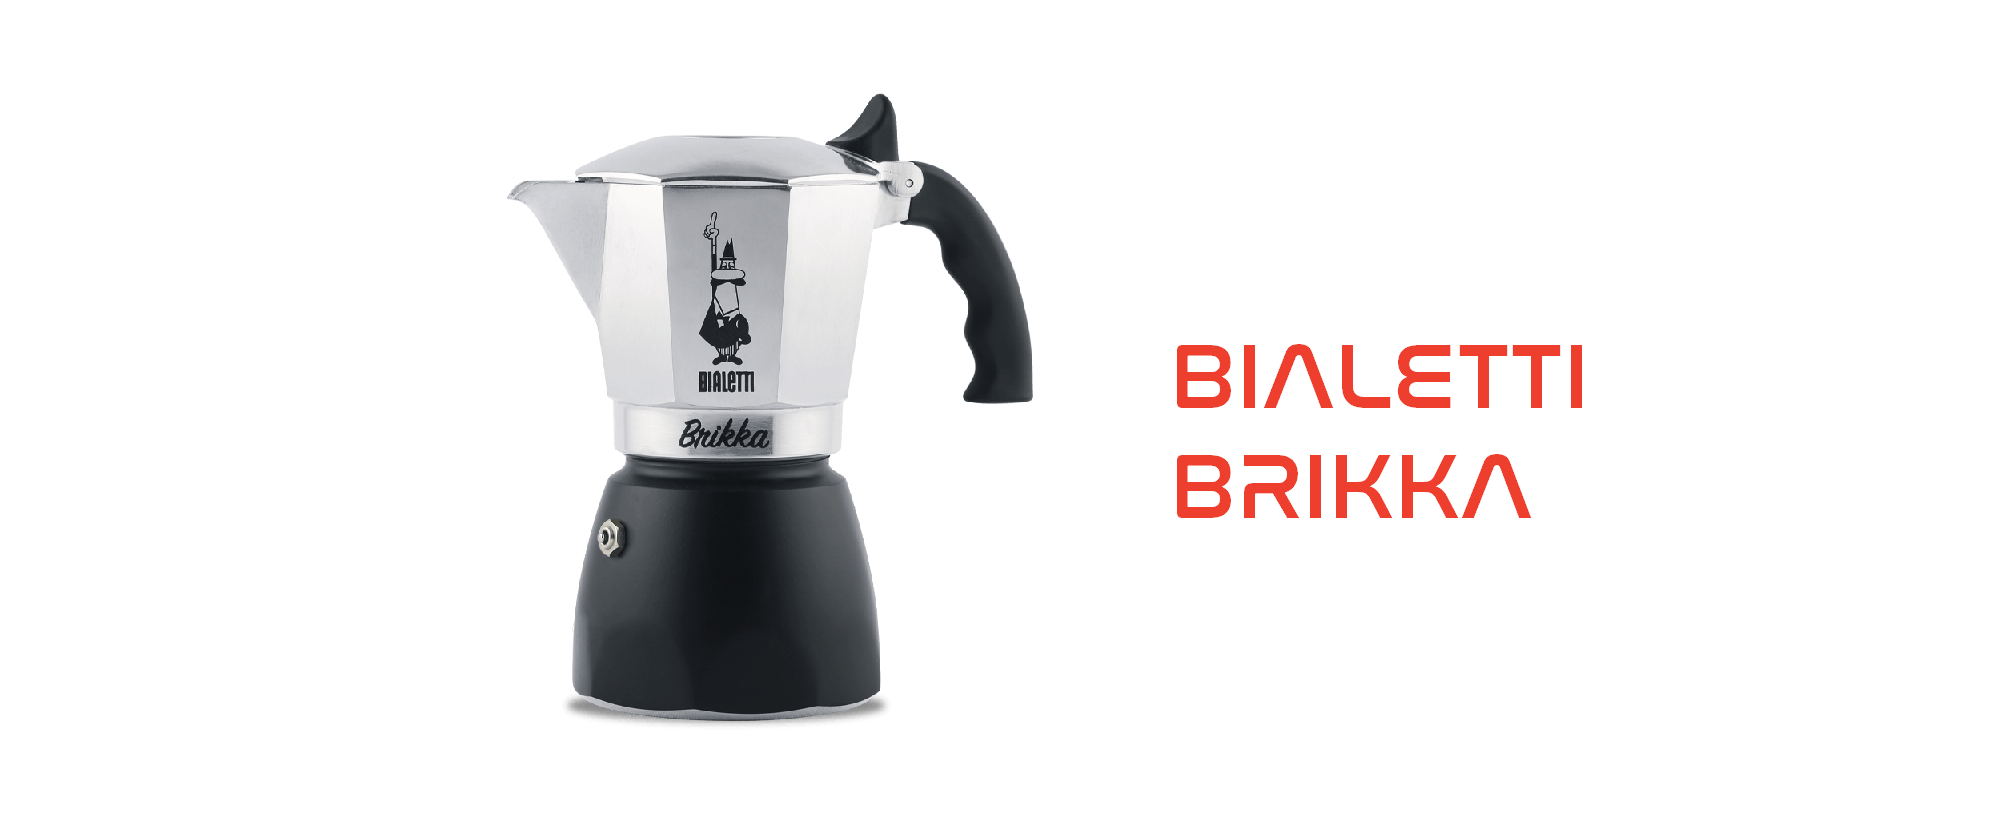 Bialetti Brikka, Brewing Guide